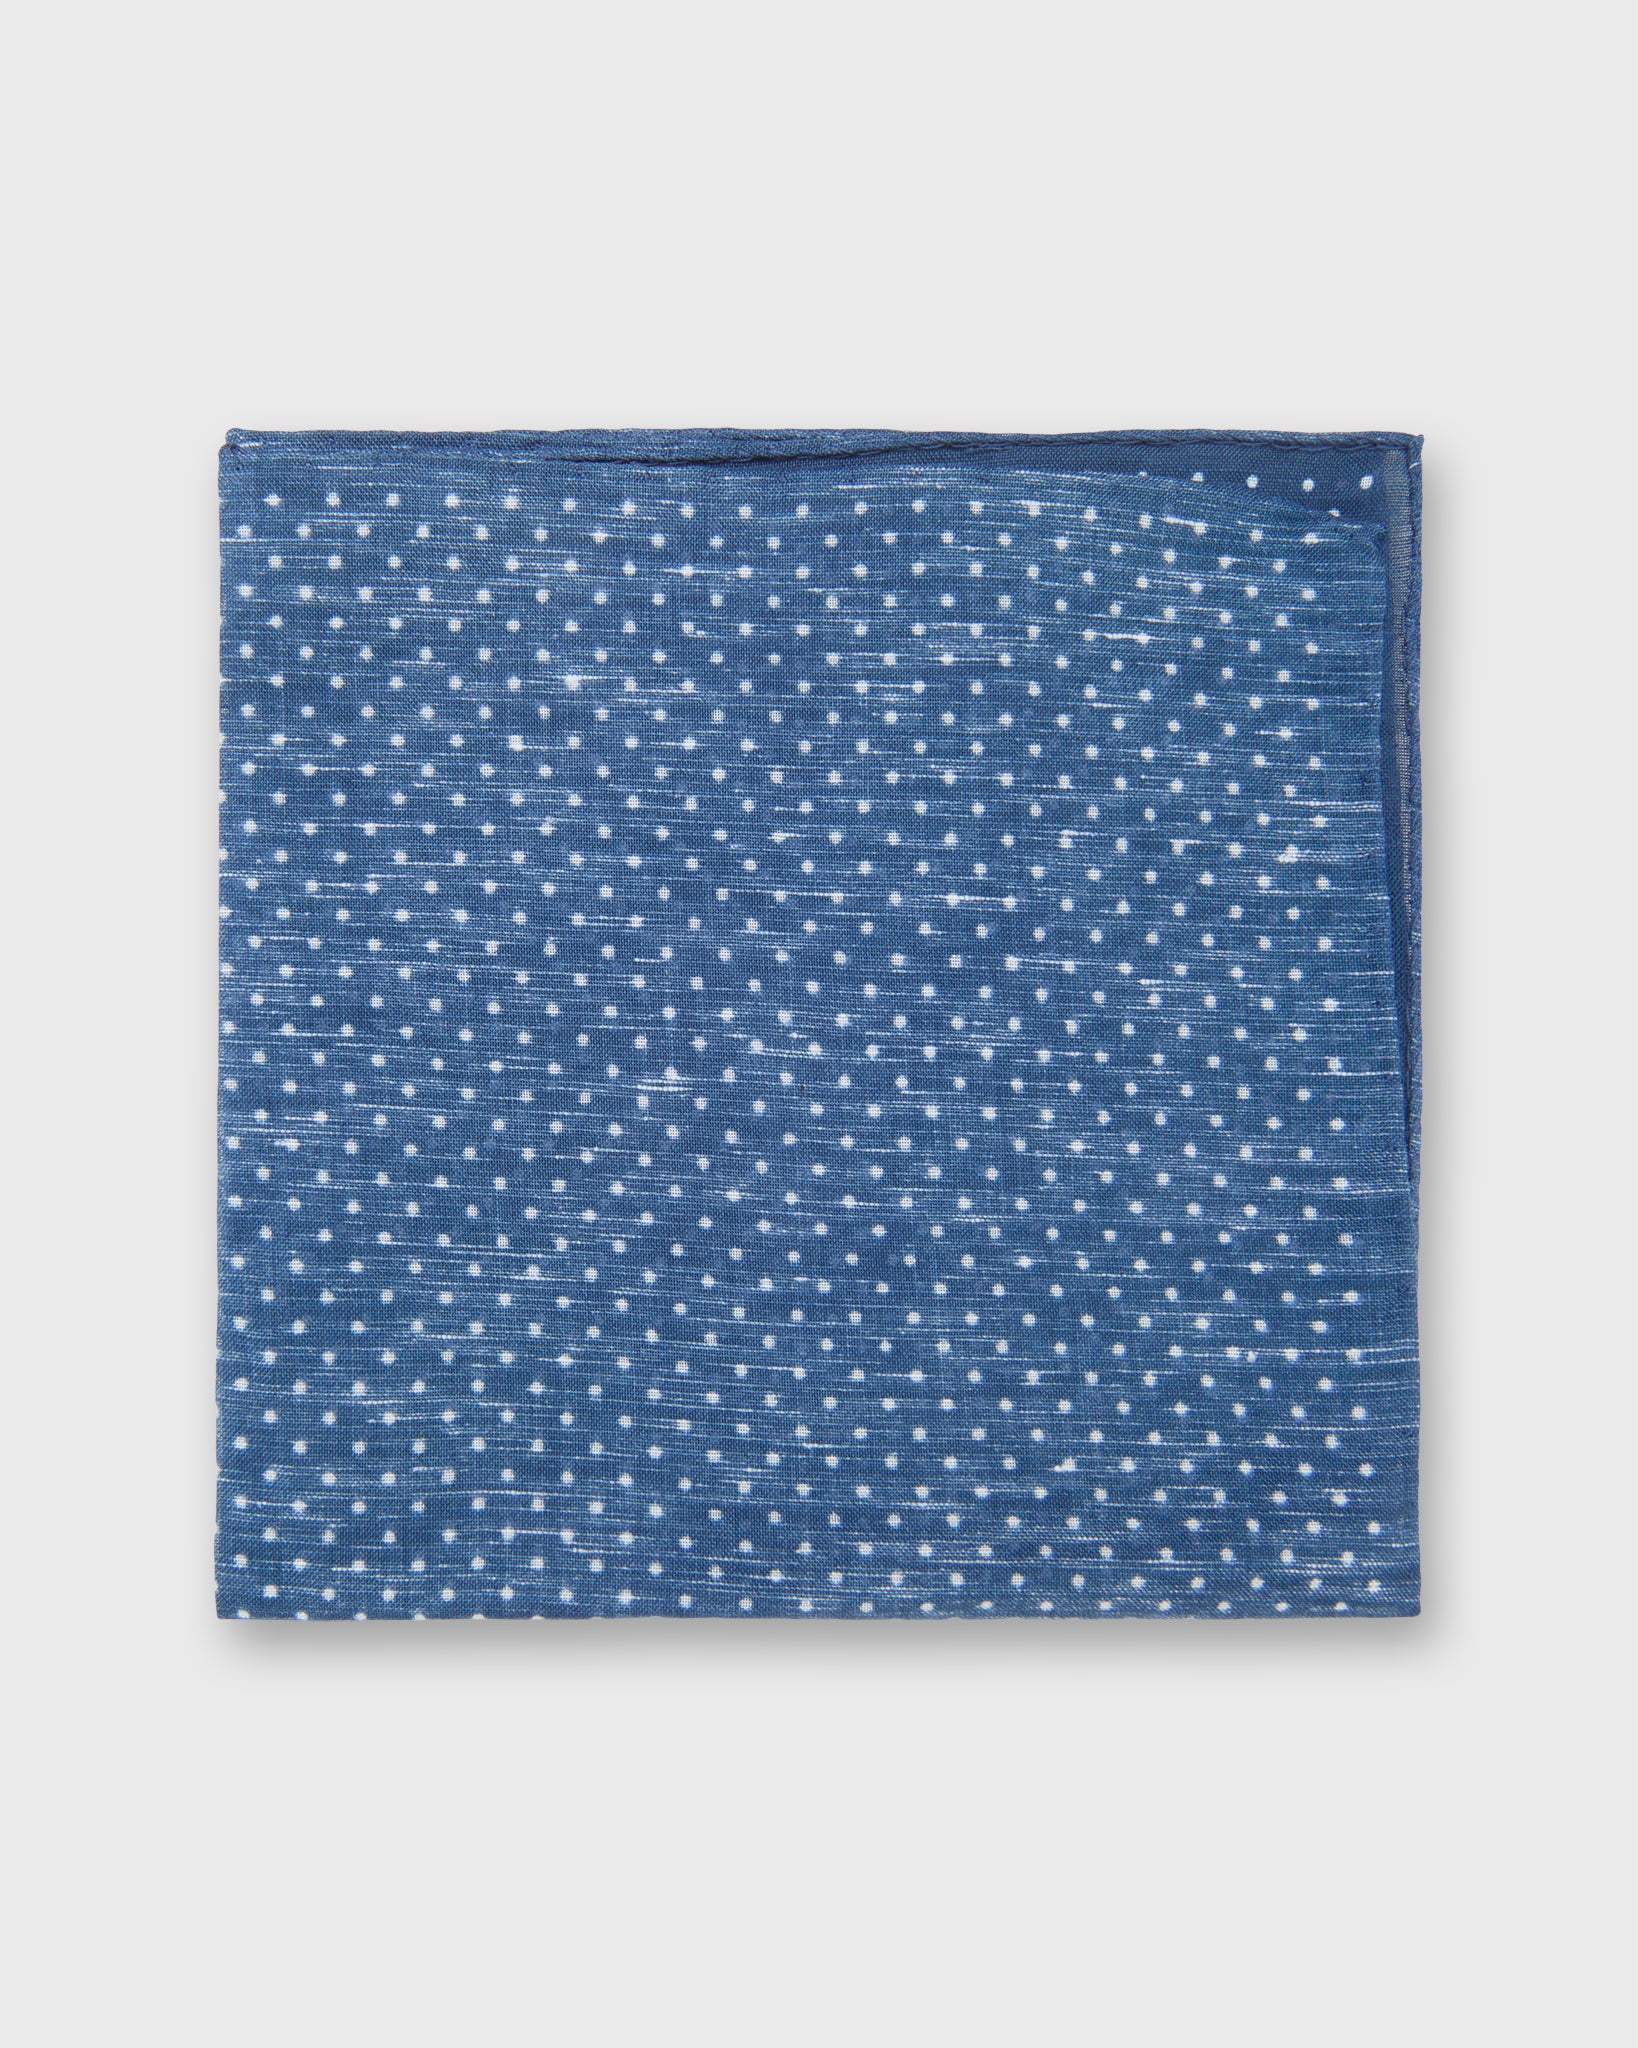 Linen/Cotton Print Pocket Square in Denim/White Dots